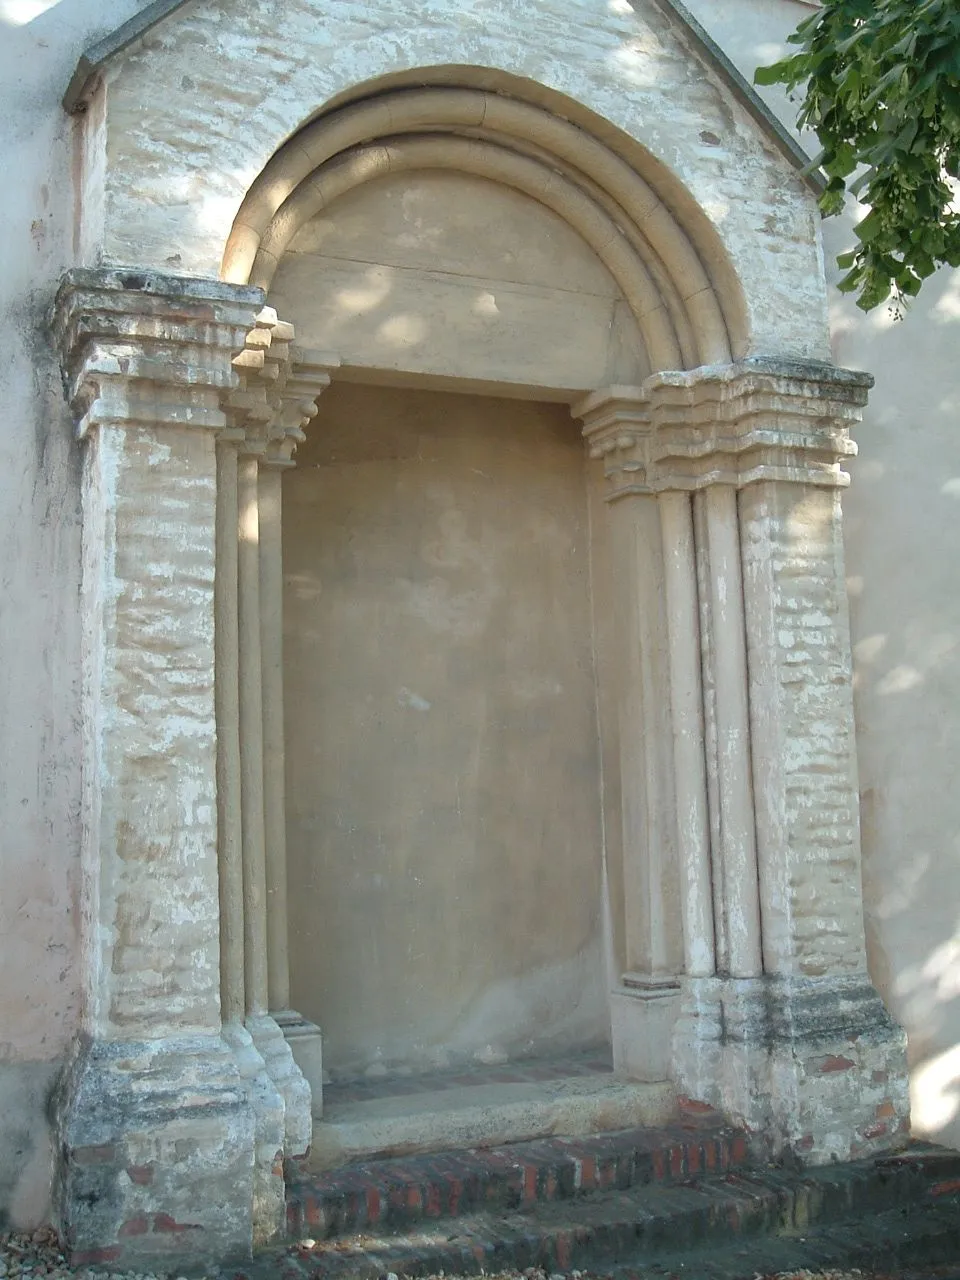 Photo showing: The romanesque style gate on the Roman Catlolic Church in Vasvár, Hungary